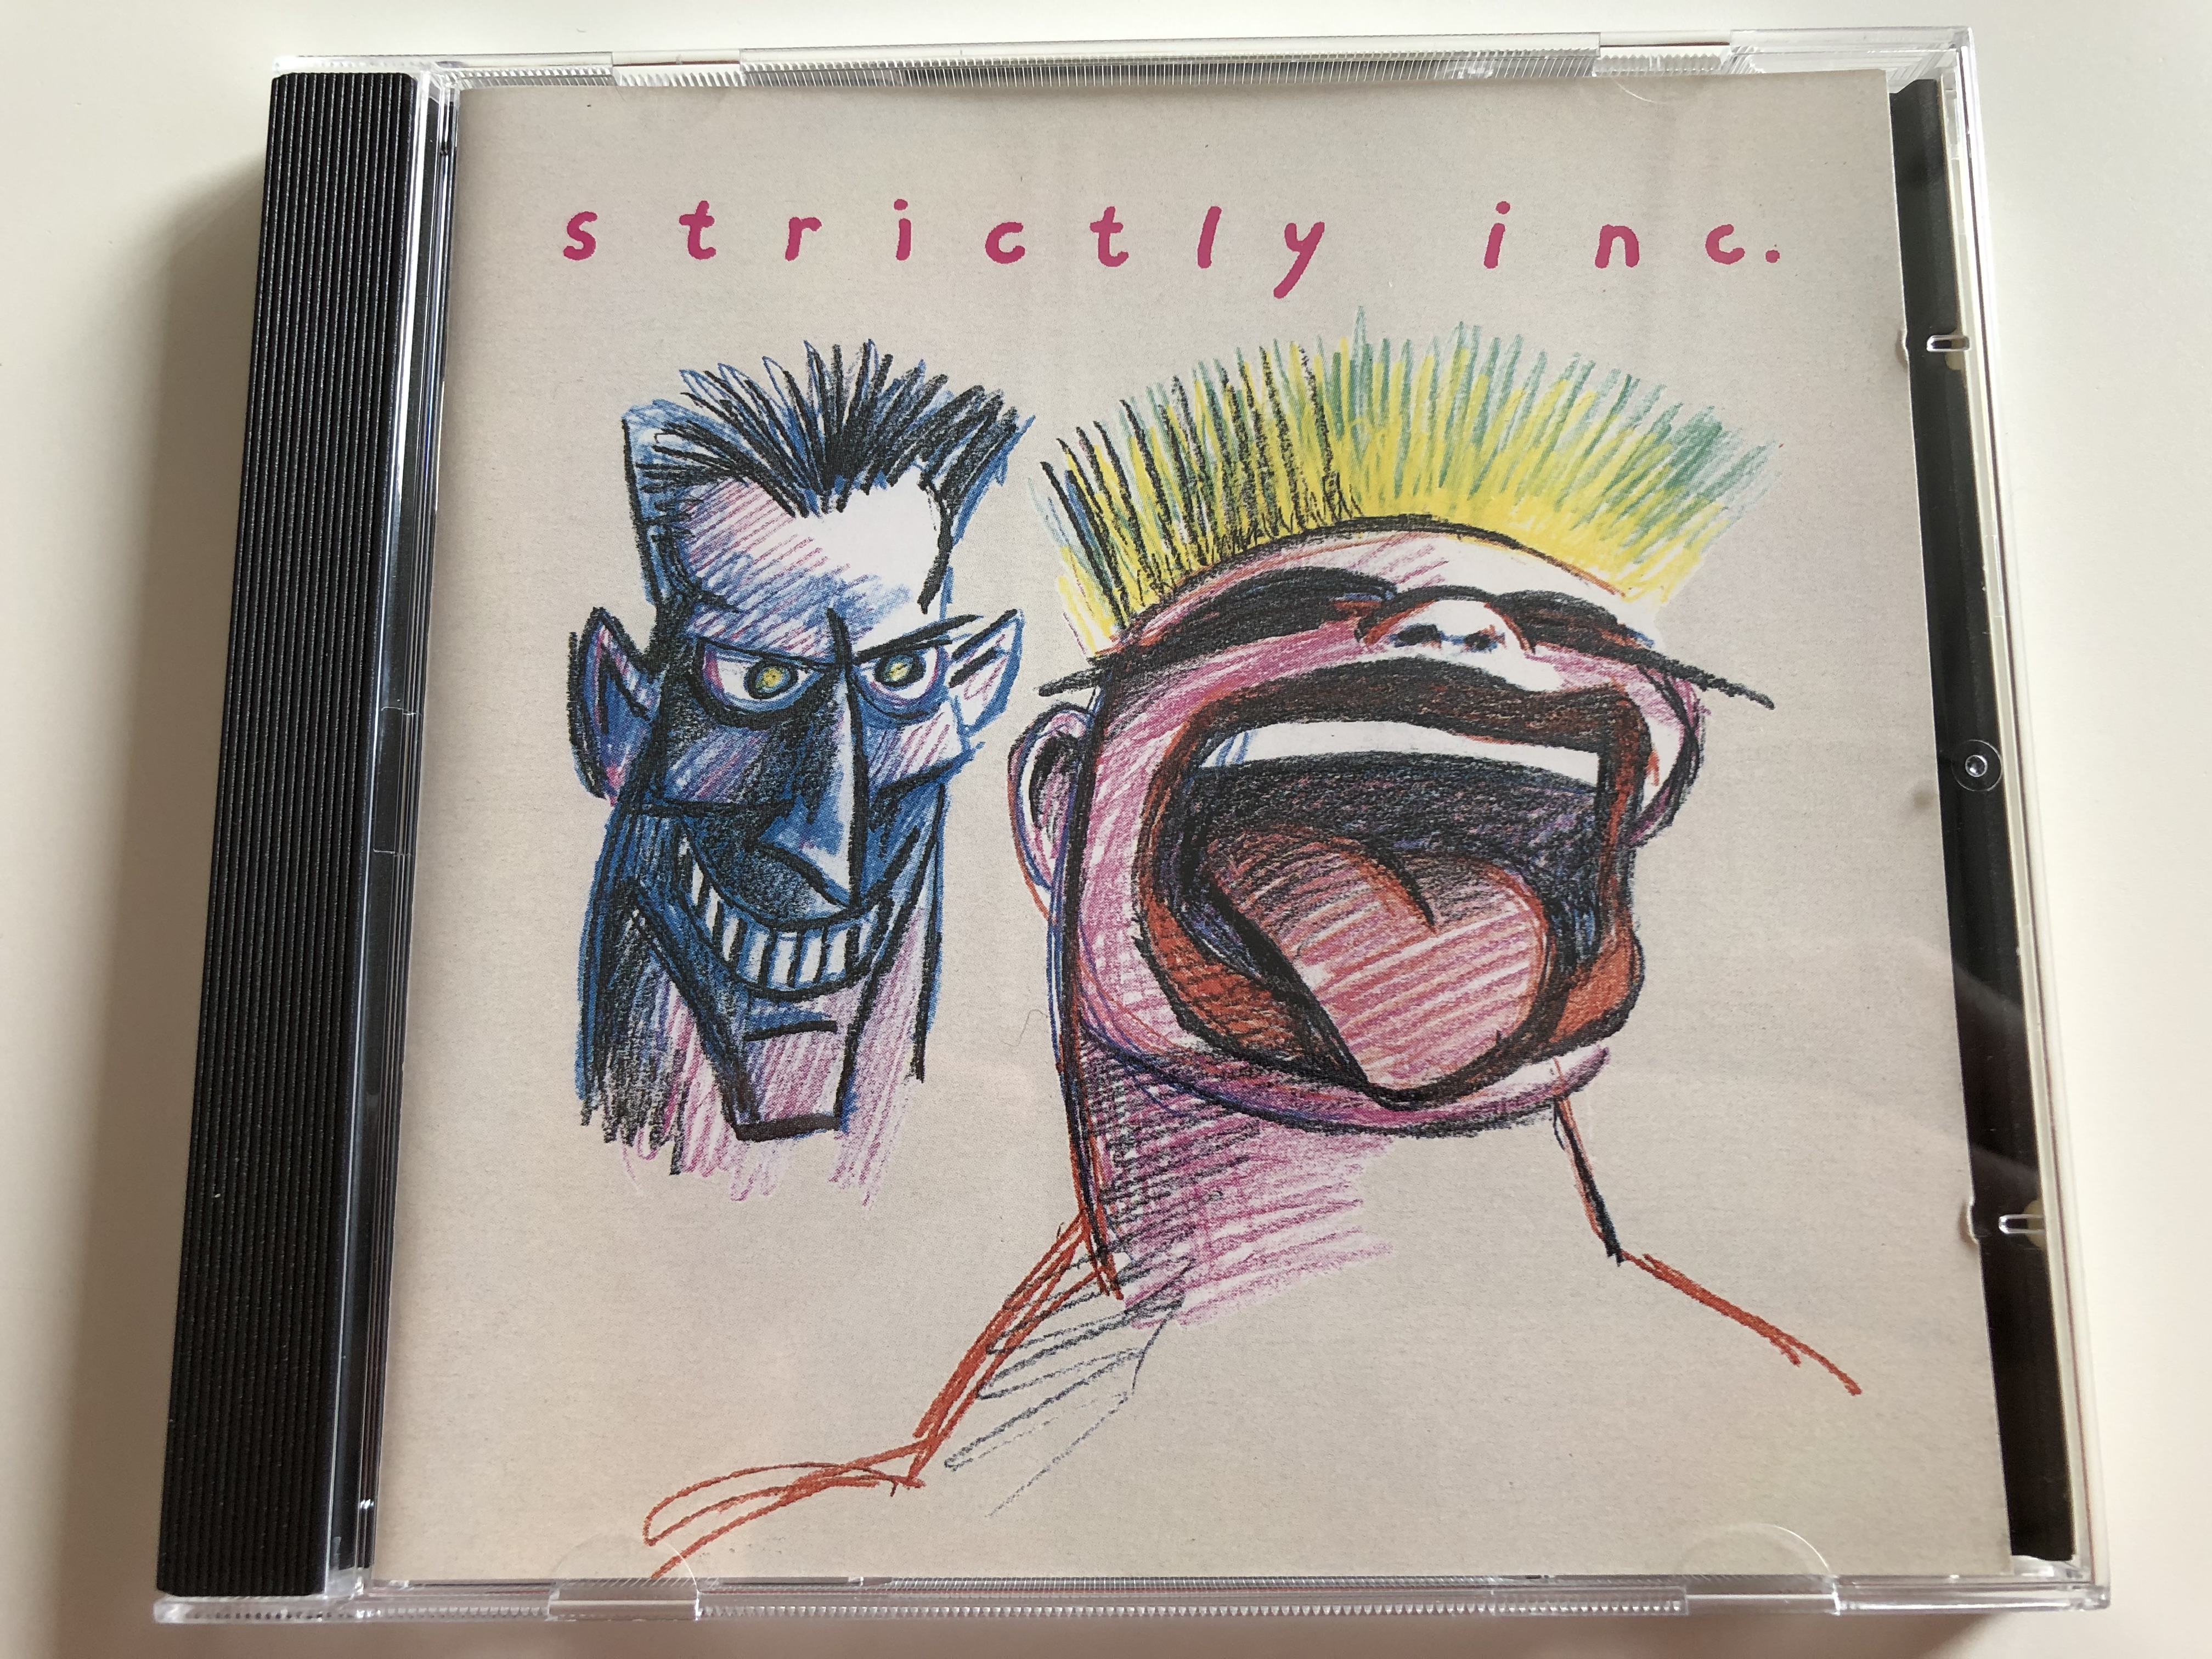 strictly-inc.-virgin-audio-cd-1995-cdv2790-1-.jpg